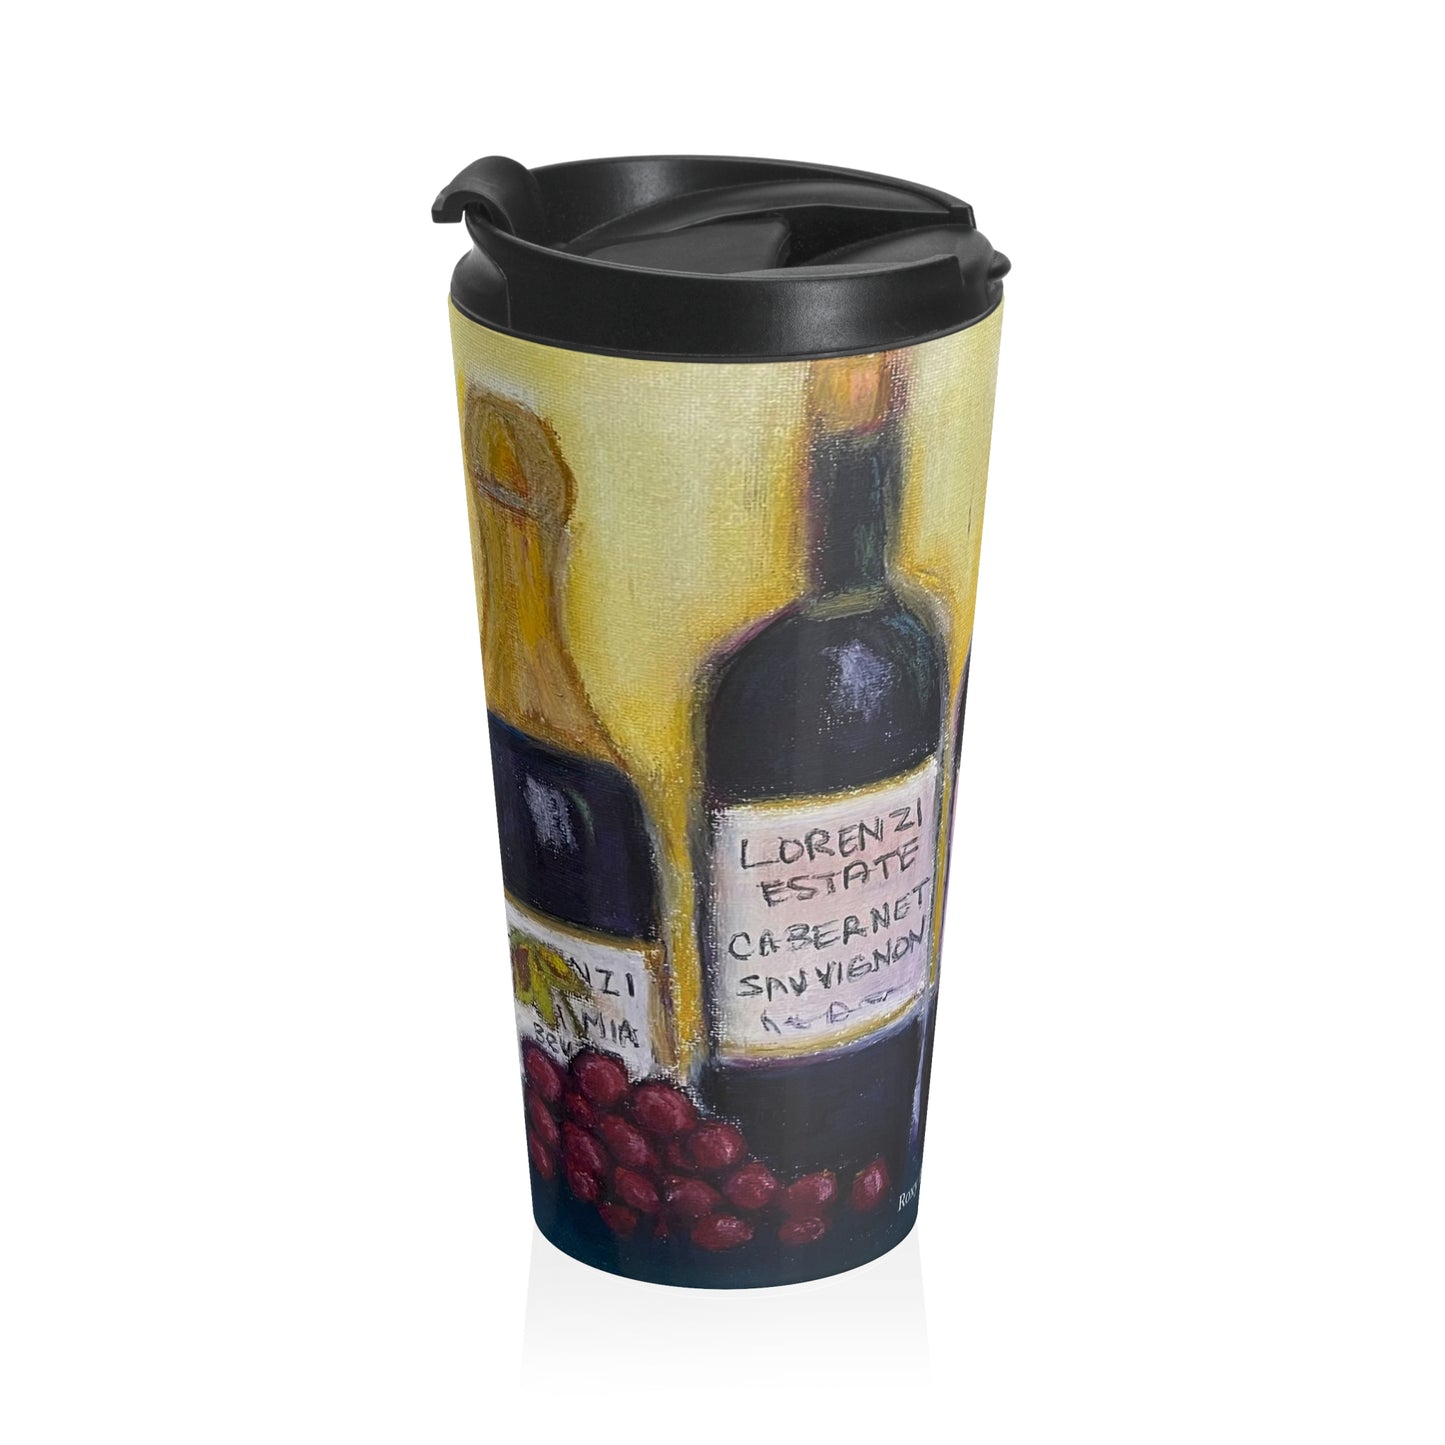 Lorenzi Estate Wine and Roses Stainless Steel Travel Mug